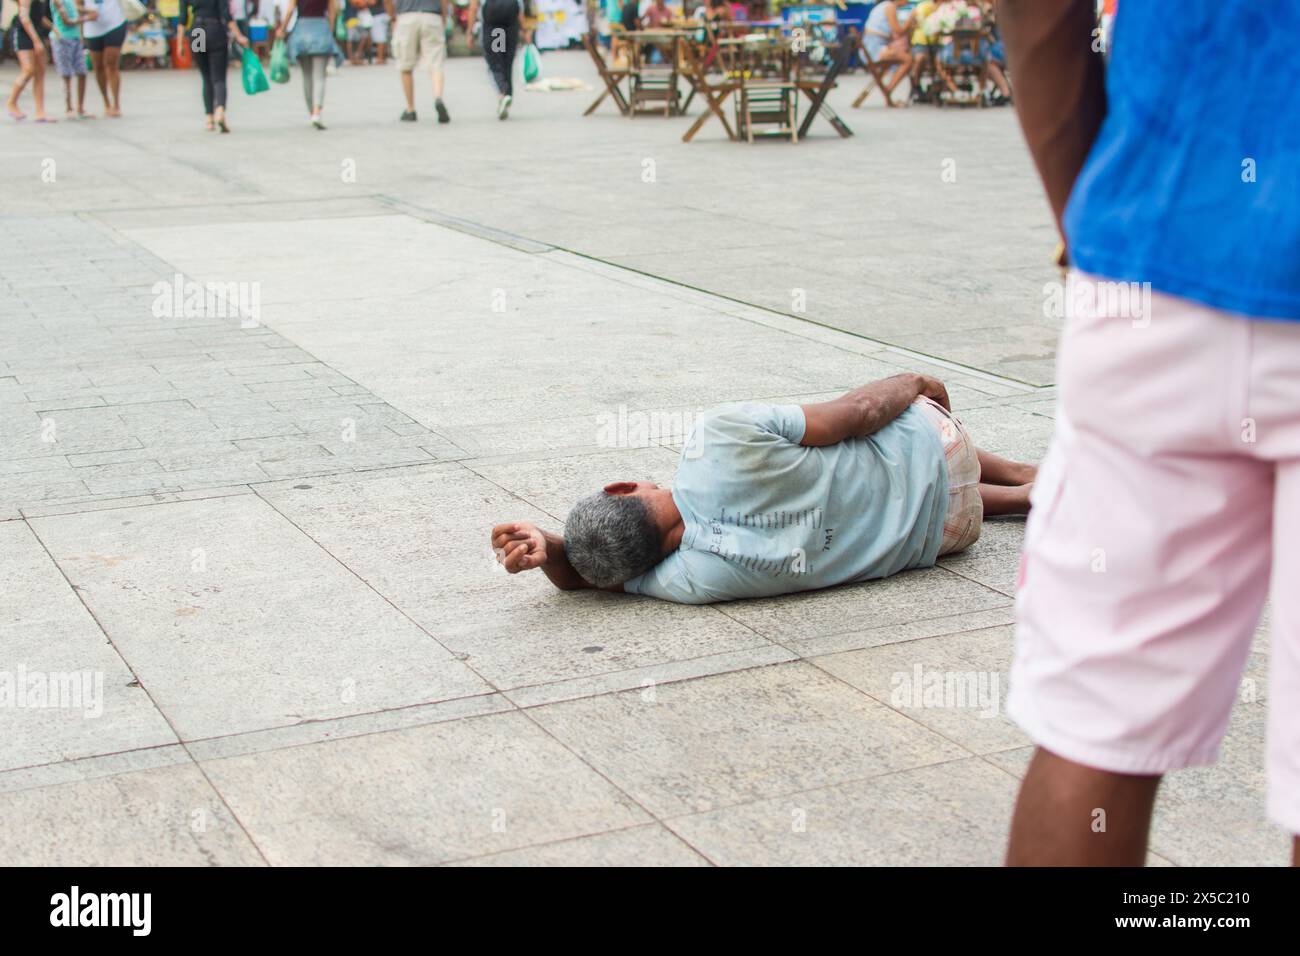 Salvador, Bahia, Brazil - July 27, 2019: A homeless man is seen sleeping in Praça da Se in Pelourinho, the historic center of the city of Salvador, Ba Stock Photo